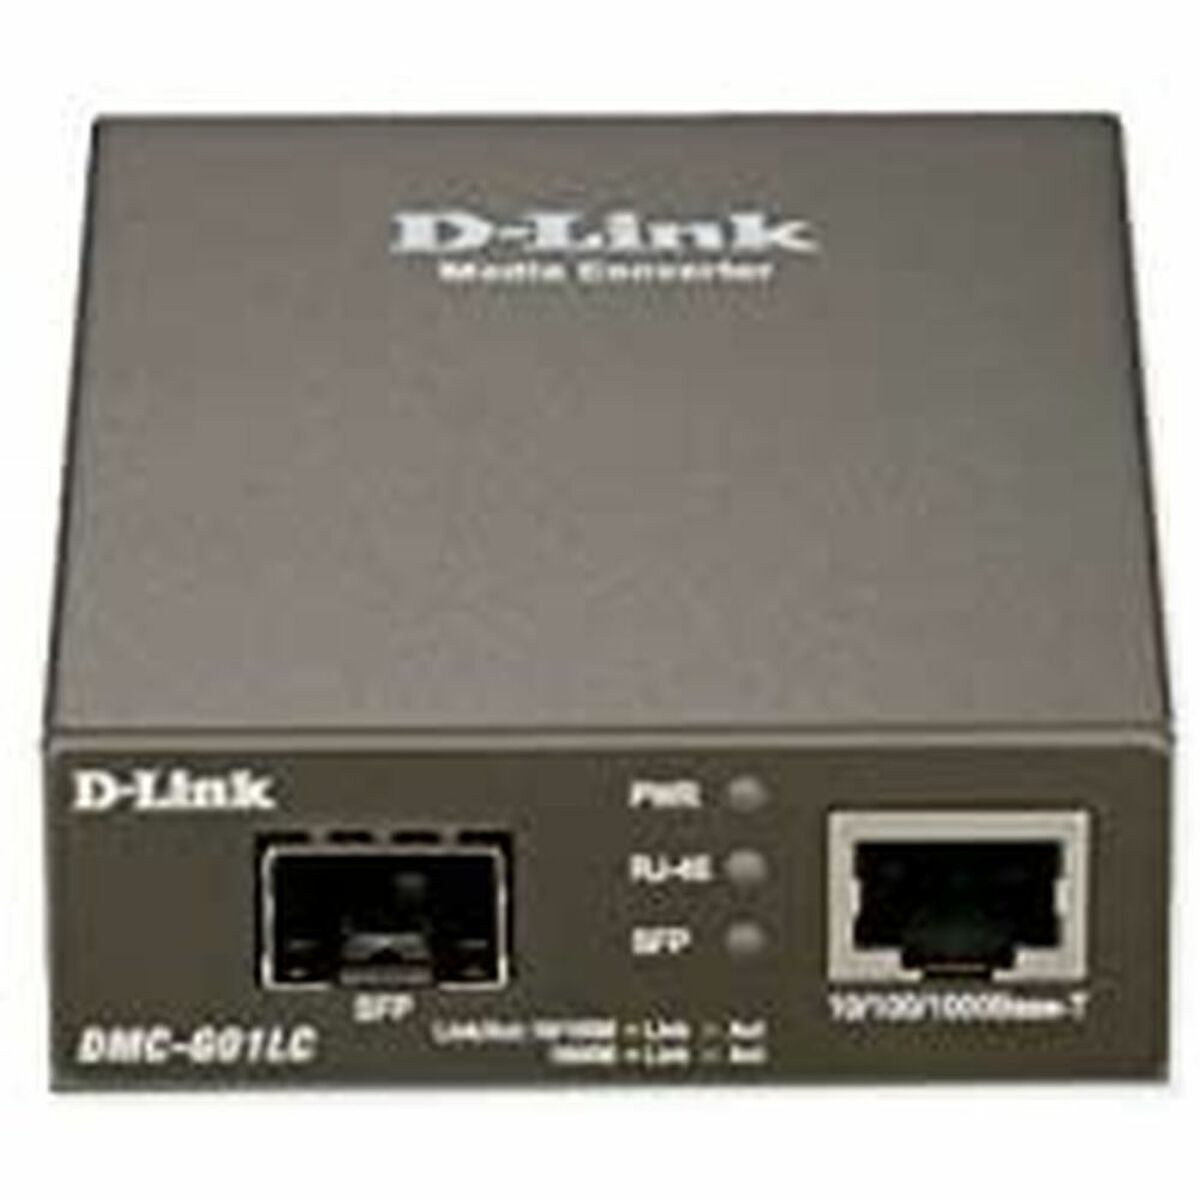 Talkie-walkie D-Link DMC-G01LC           